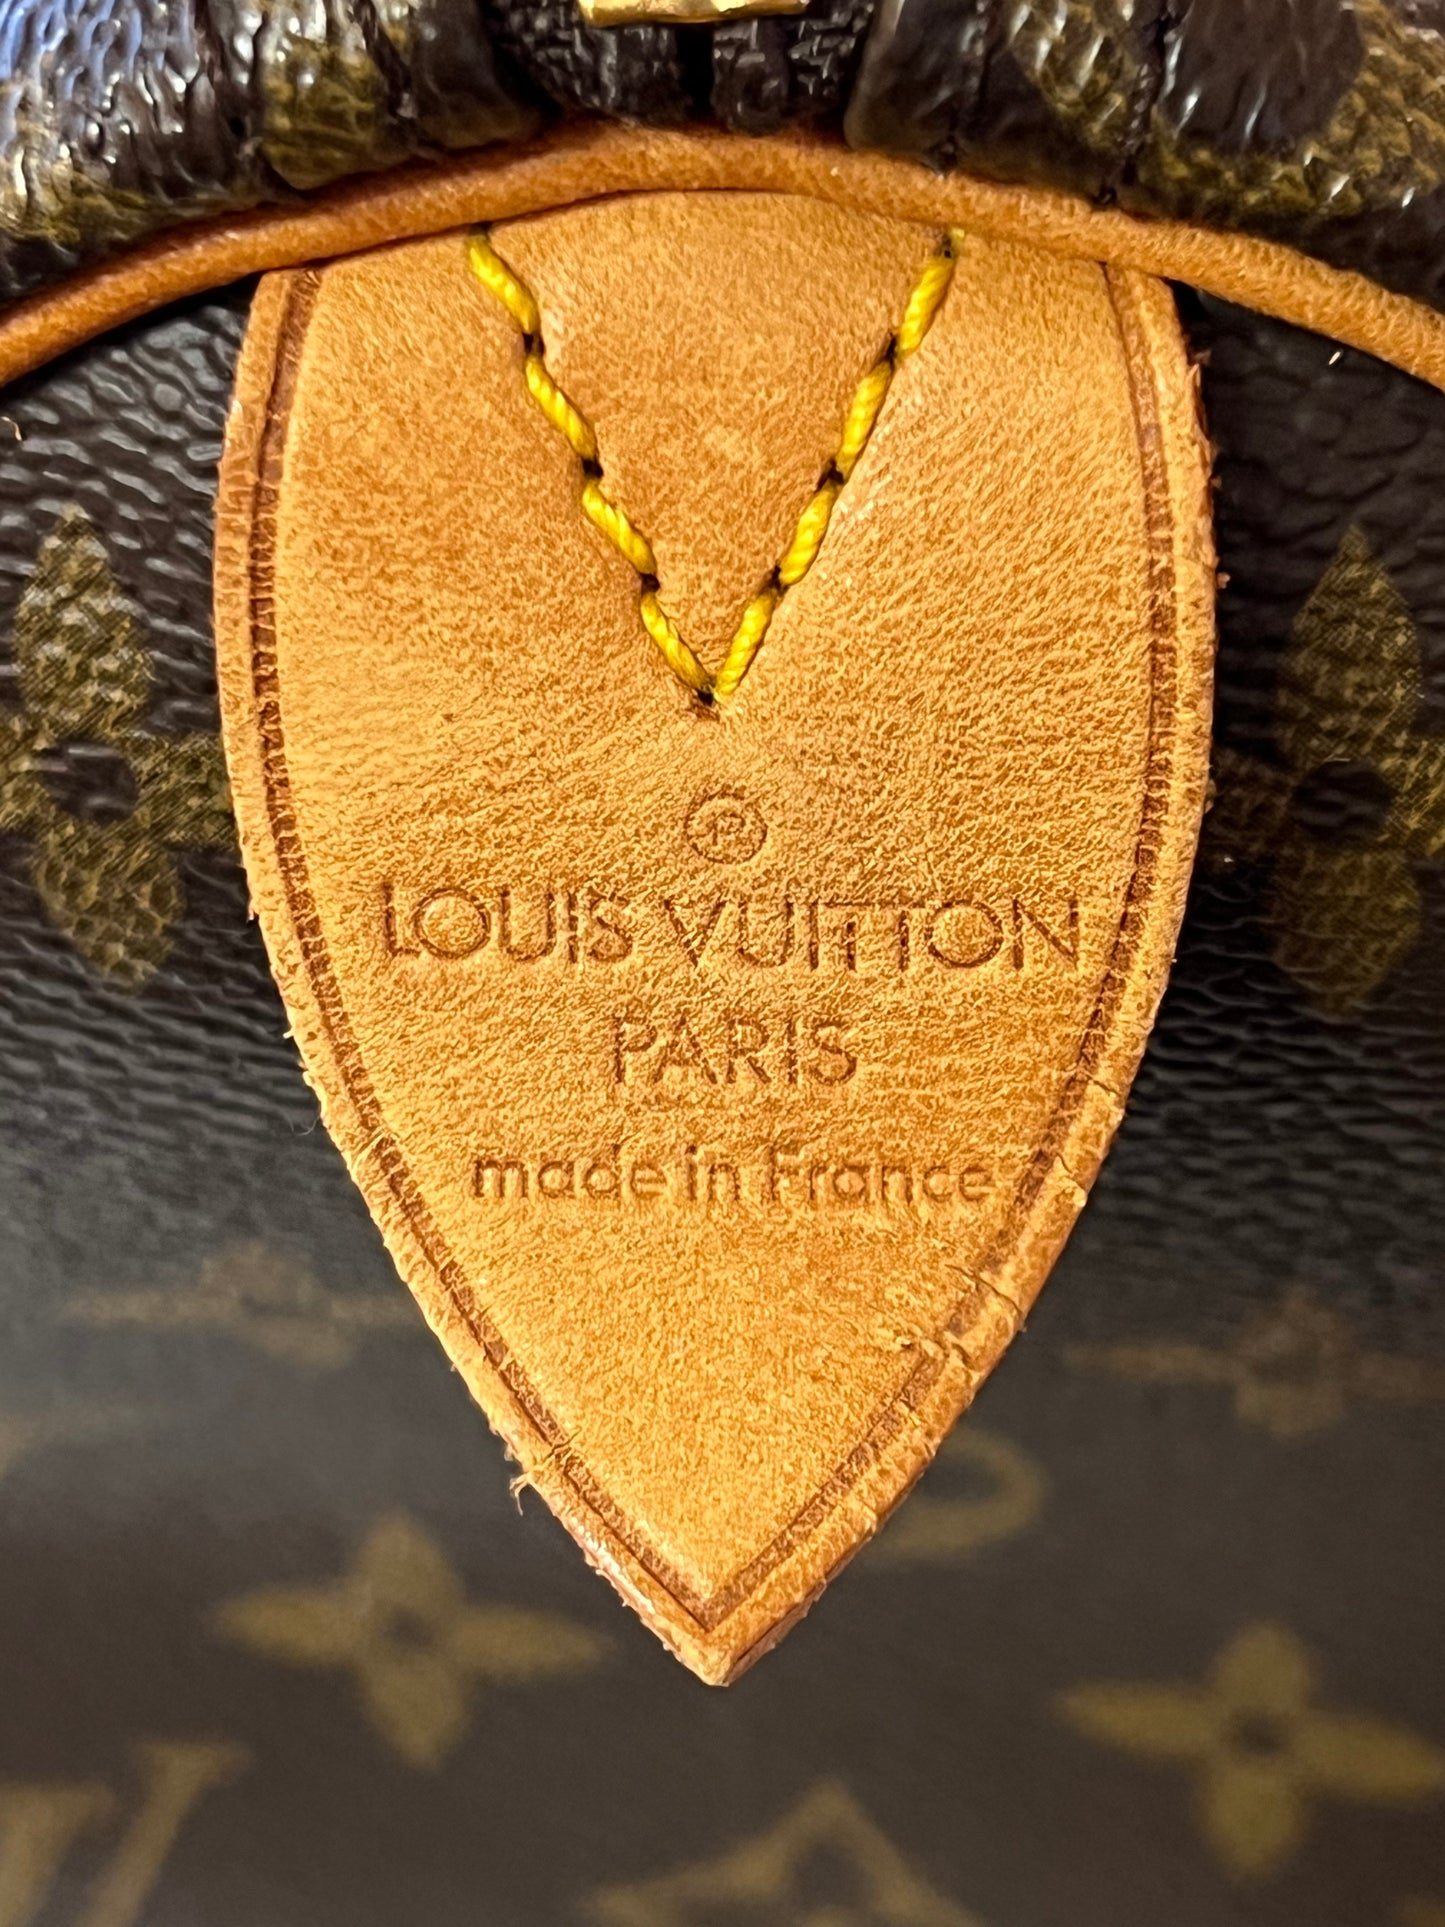 Louis Vuitton Speedy 25 vintage